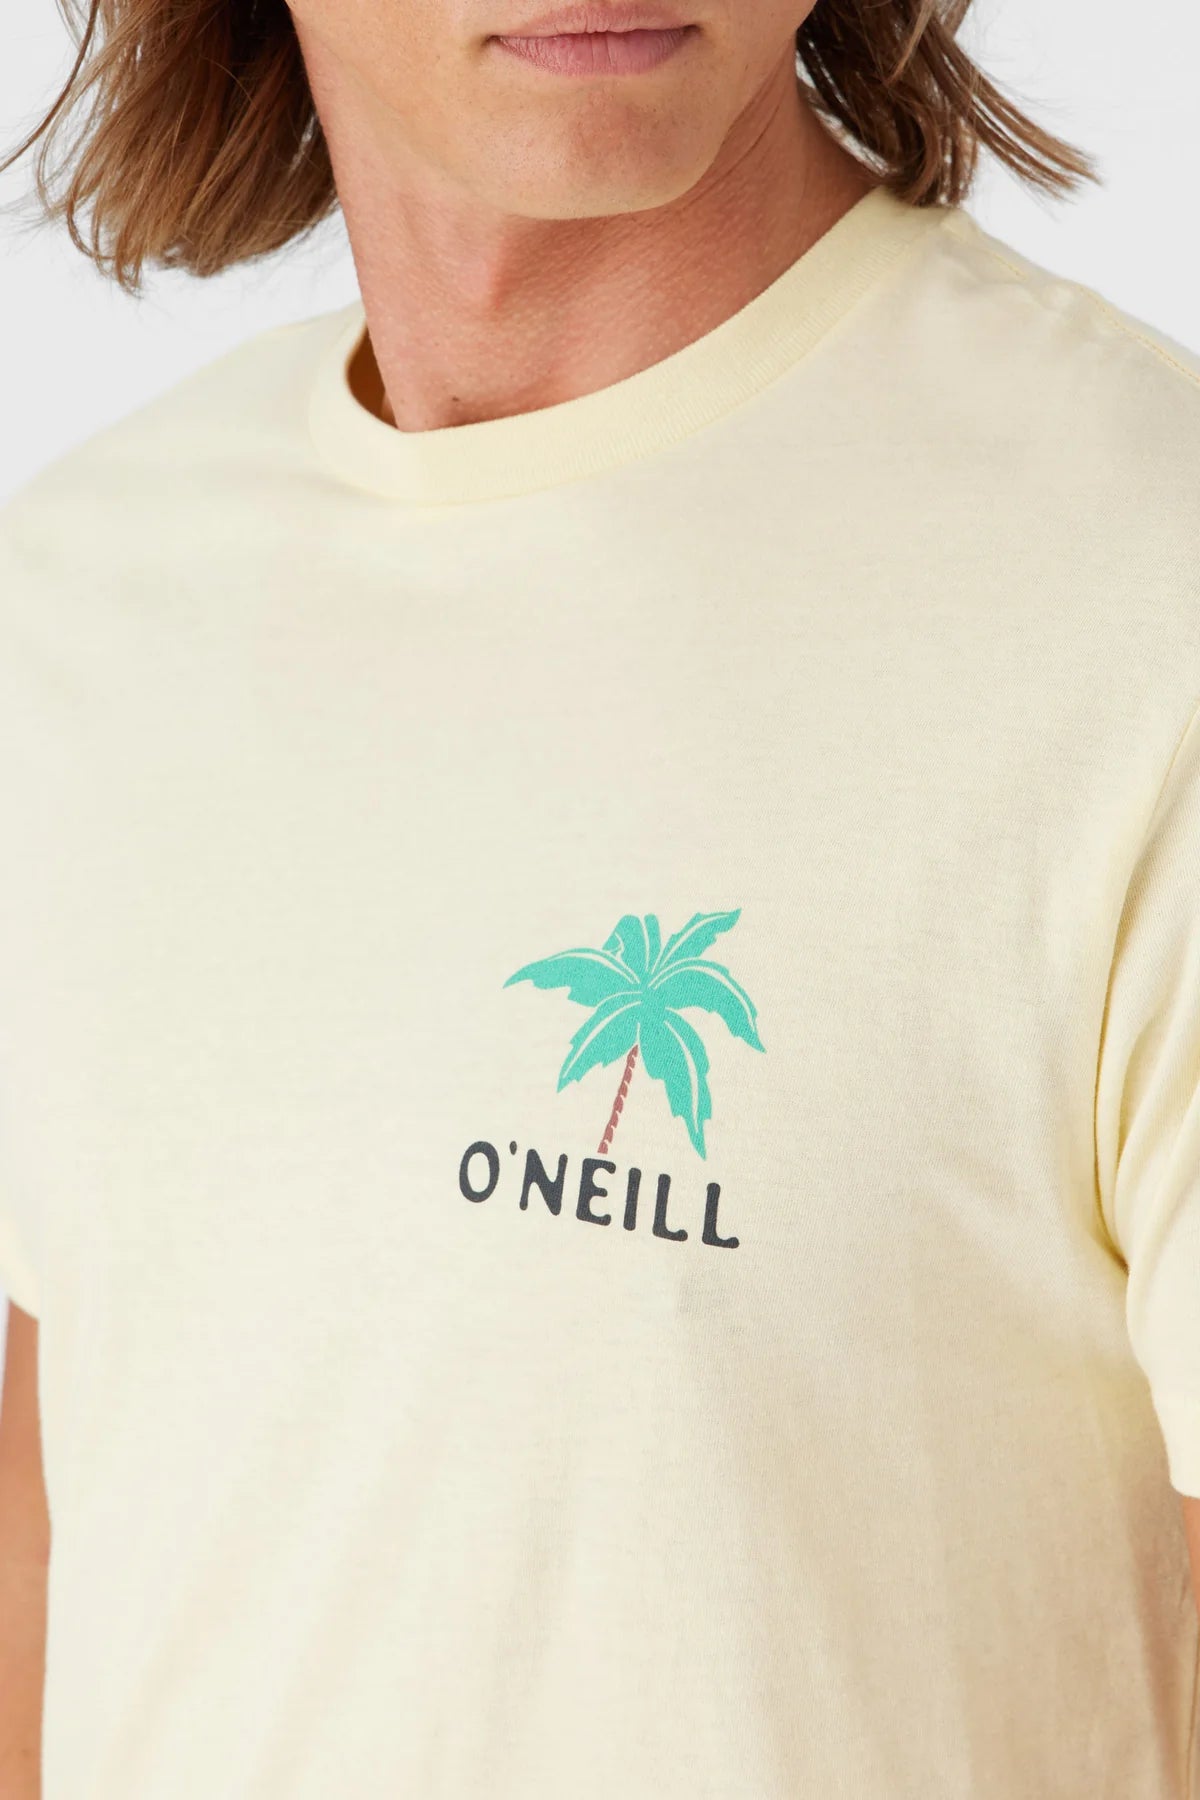 O'Neill Diamond Life Tee